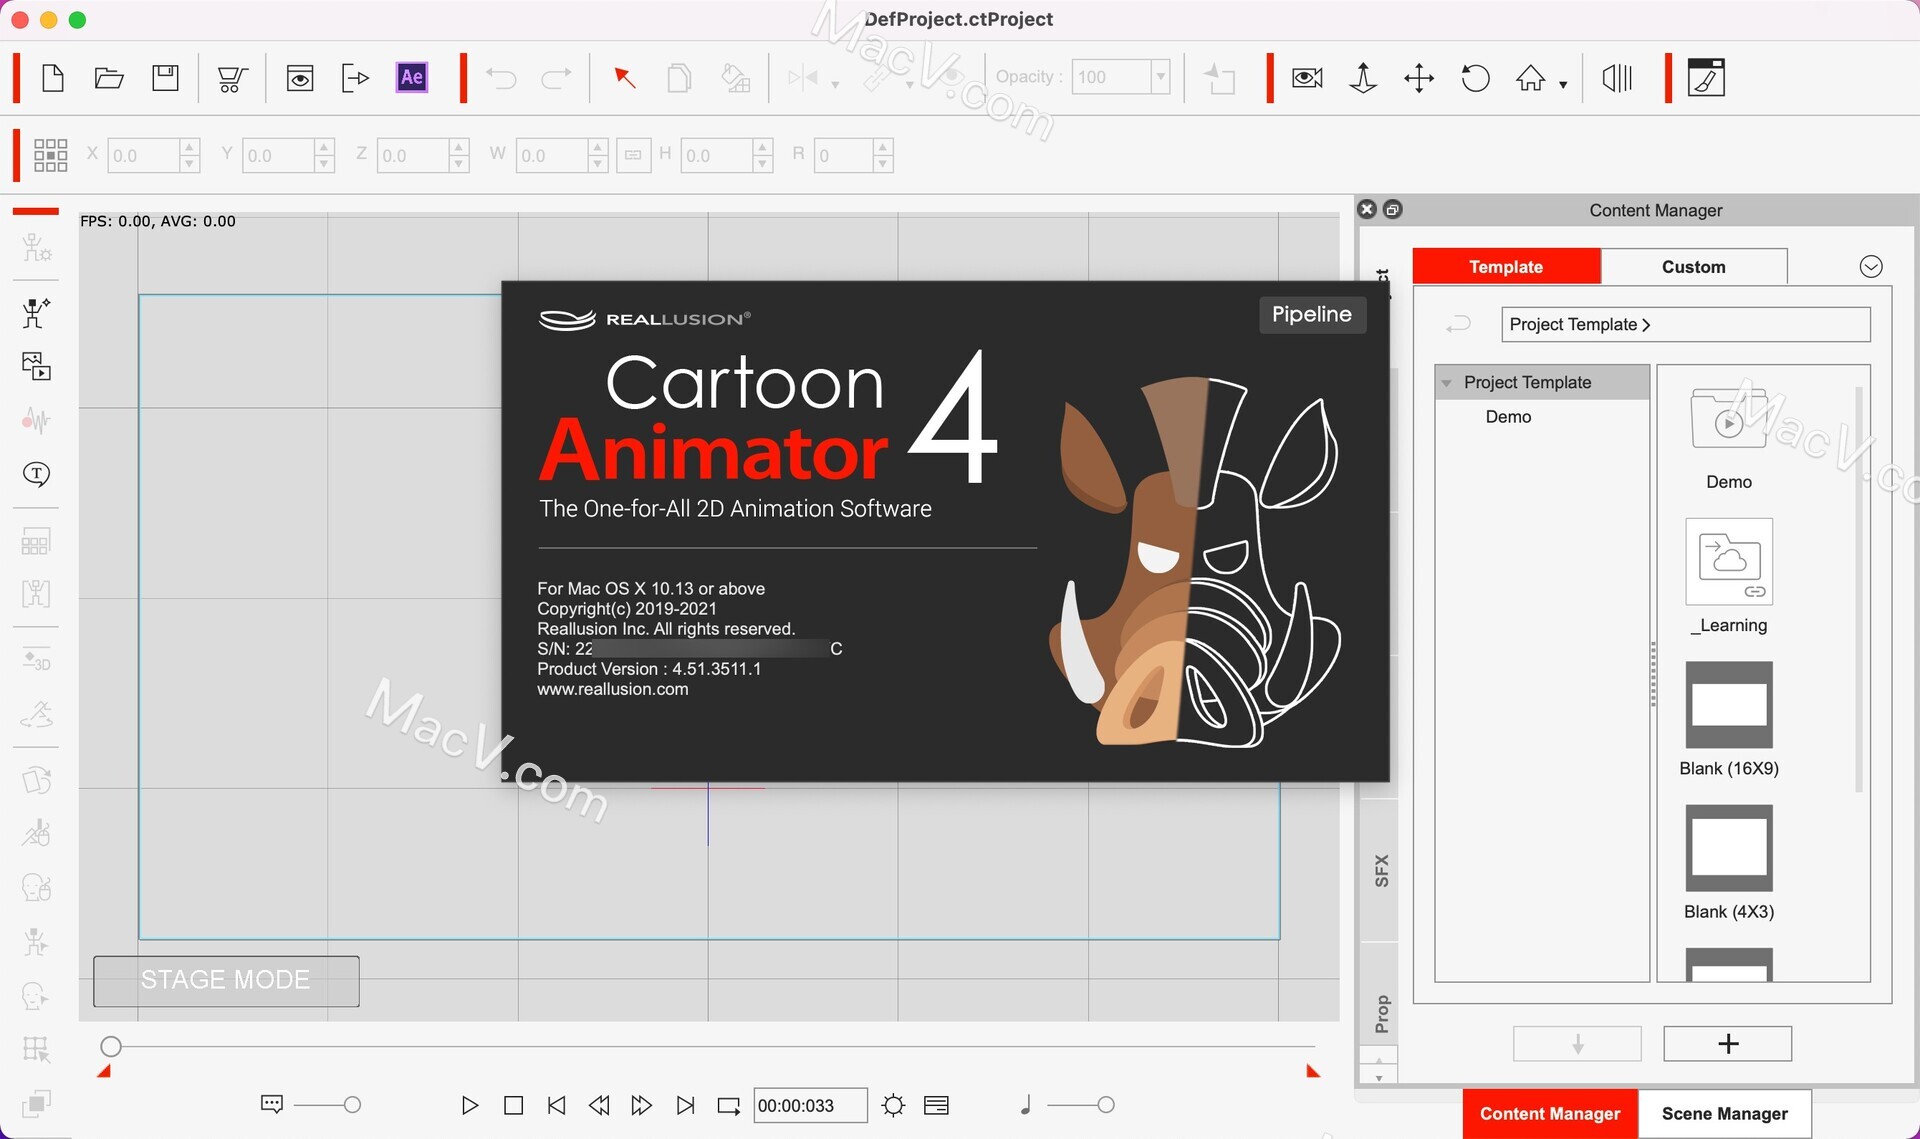 download the last version for mac Reallusion Cartoon Animator 5.21.2202.1 Pipeline